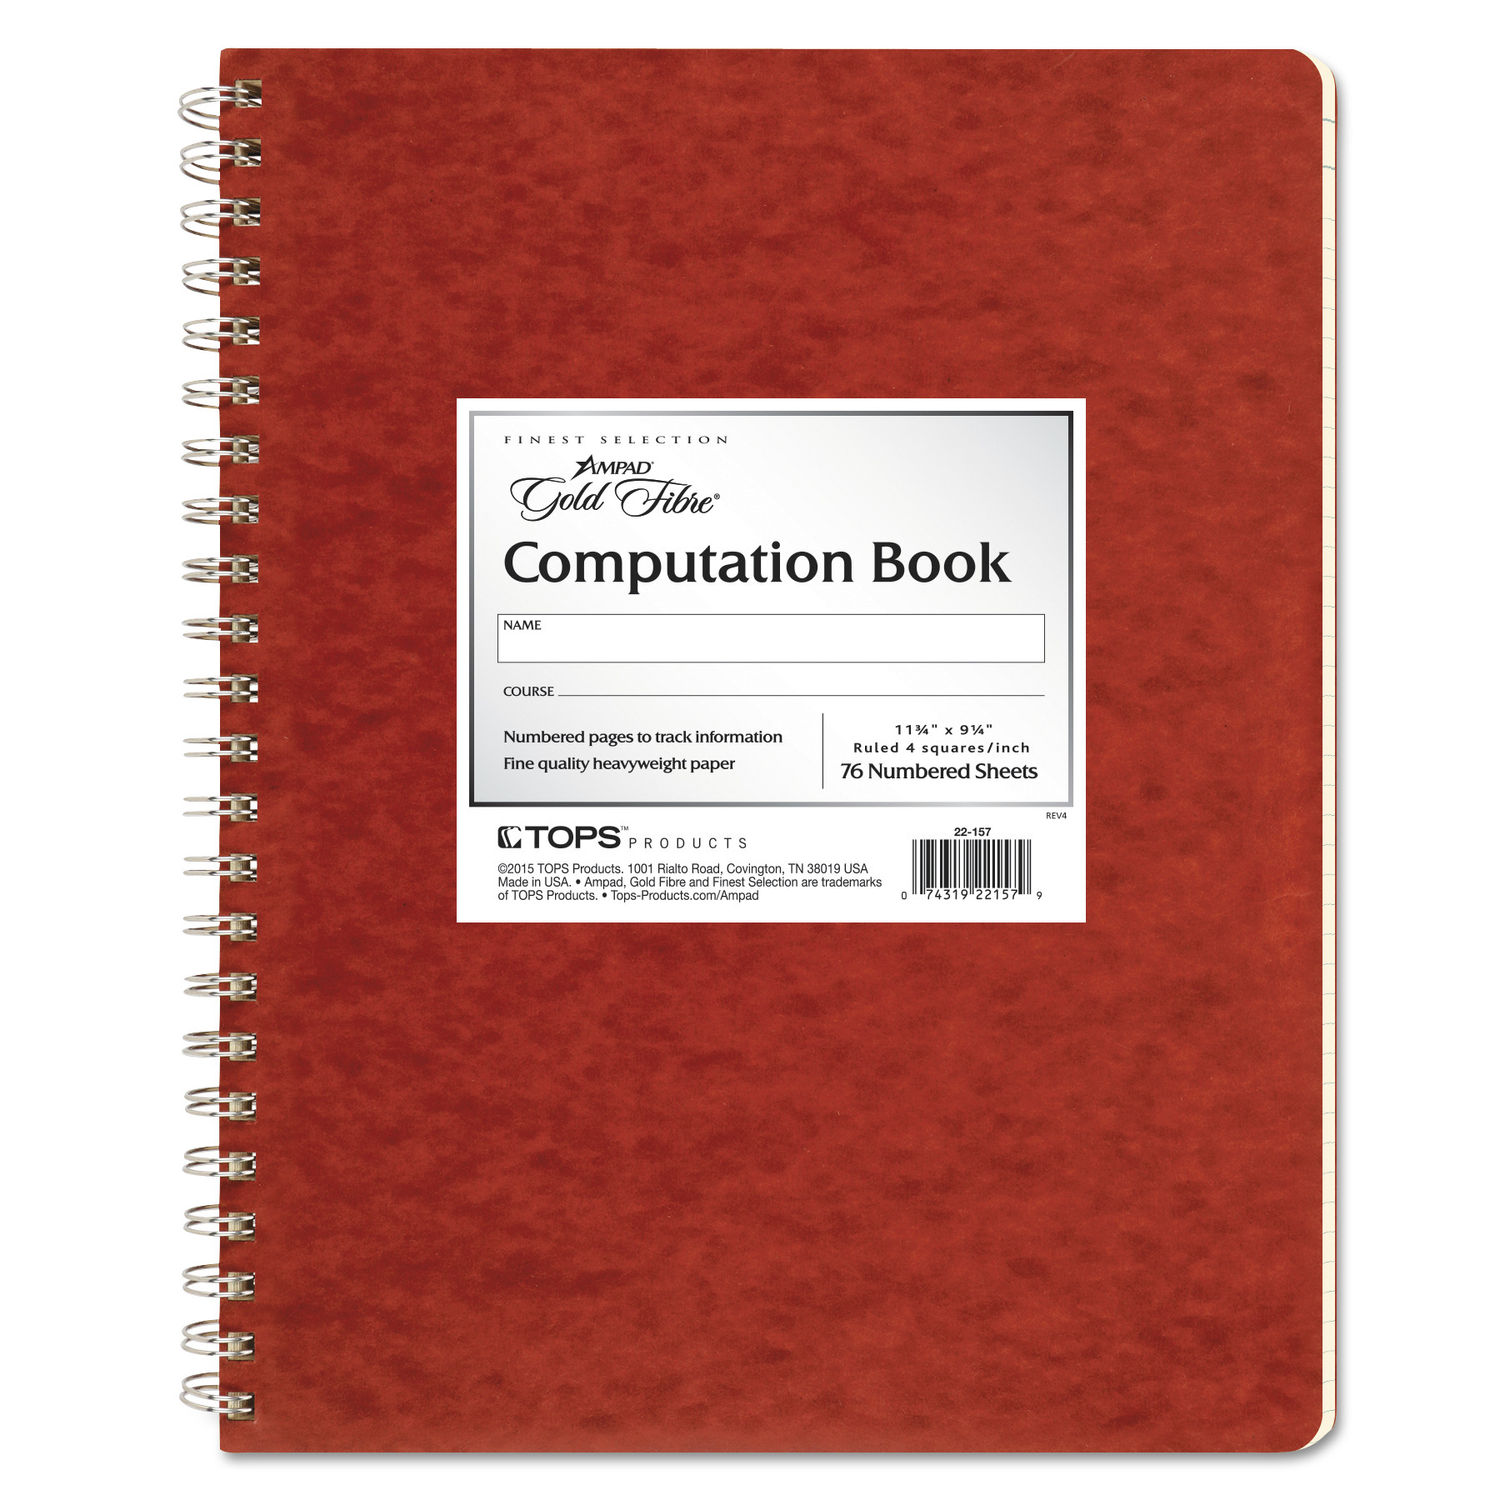 Computation Book by Ampadandreg; TOP22157